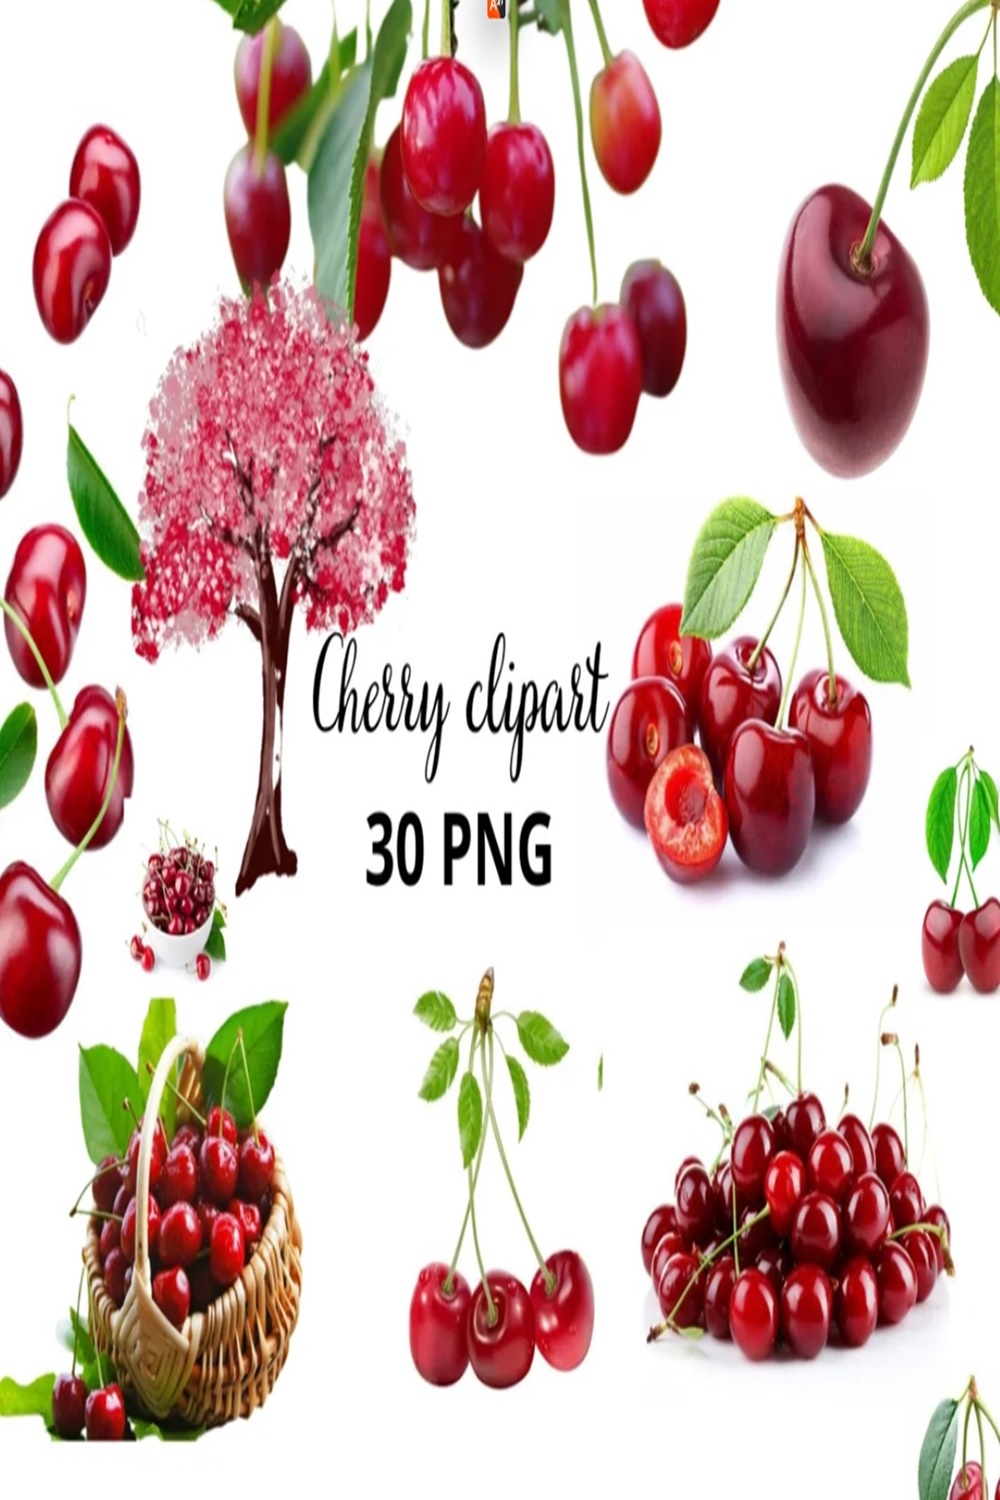 Cherry clipart, Kersen Clipart Bundel - 30 Fruit PNG Afbeeldingen, Cherry blossom clipart, Cherry transparent background, Red cherry pinterest preview image.